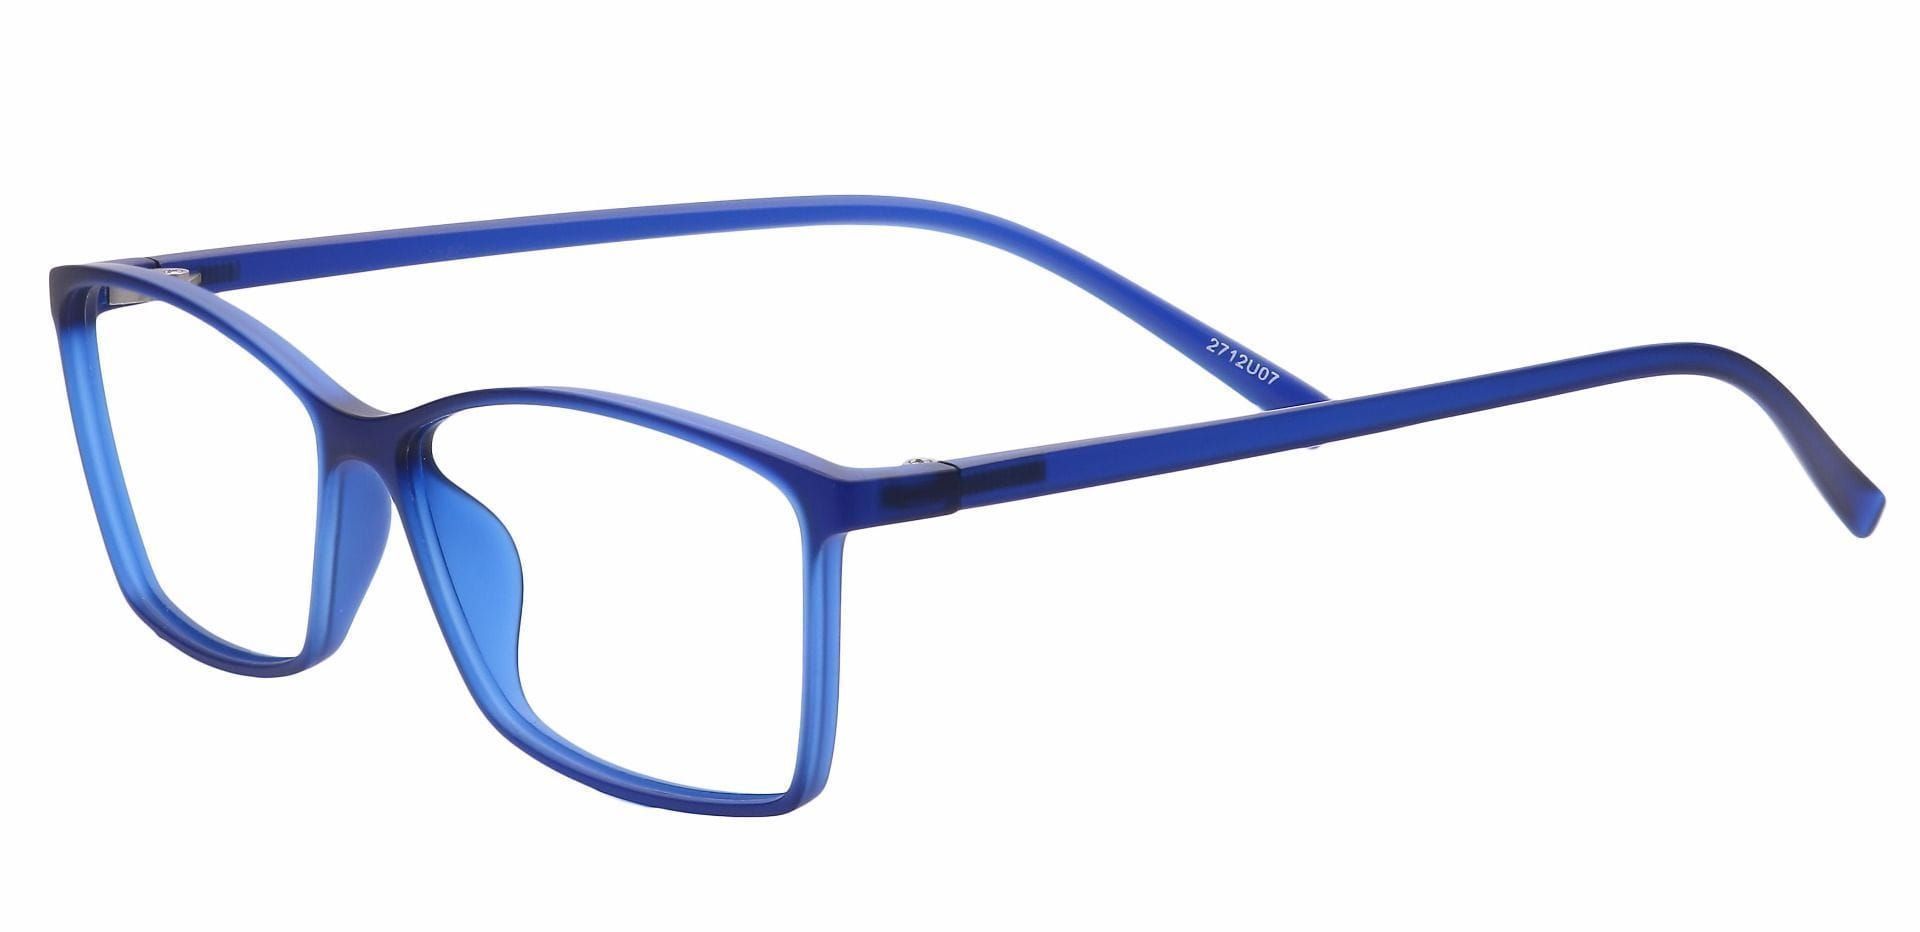 Align Rectangle Lined Bifocal Glasses - Blue